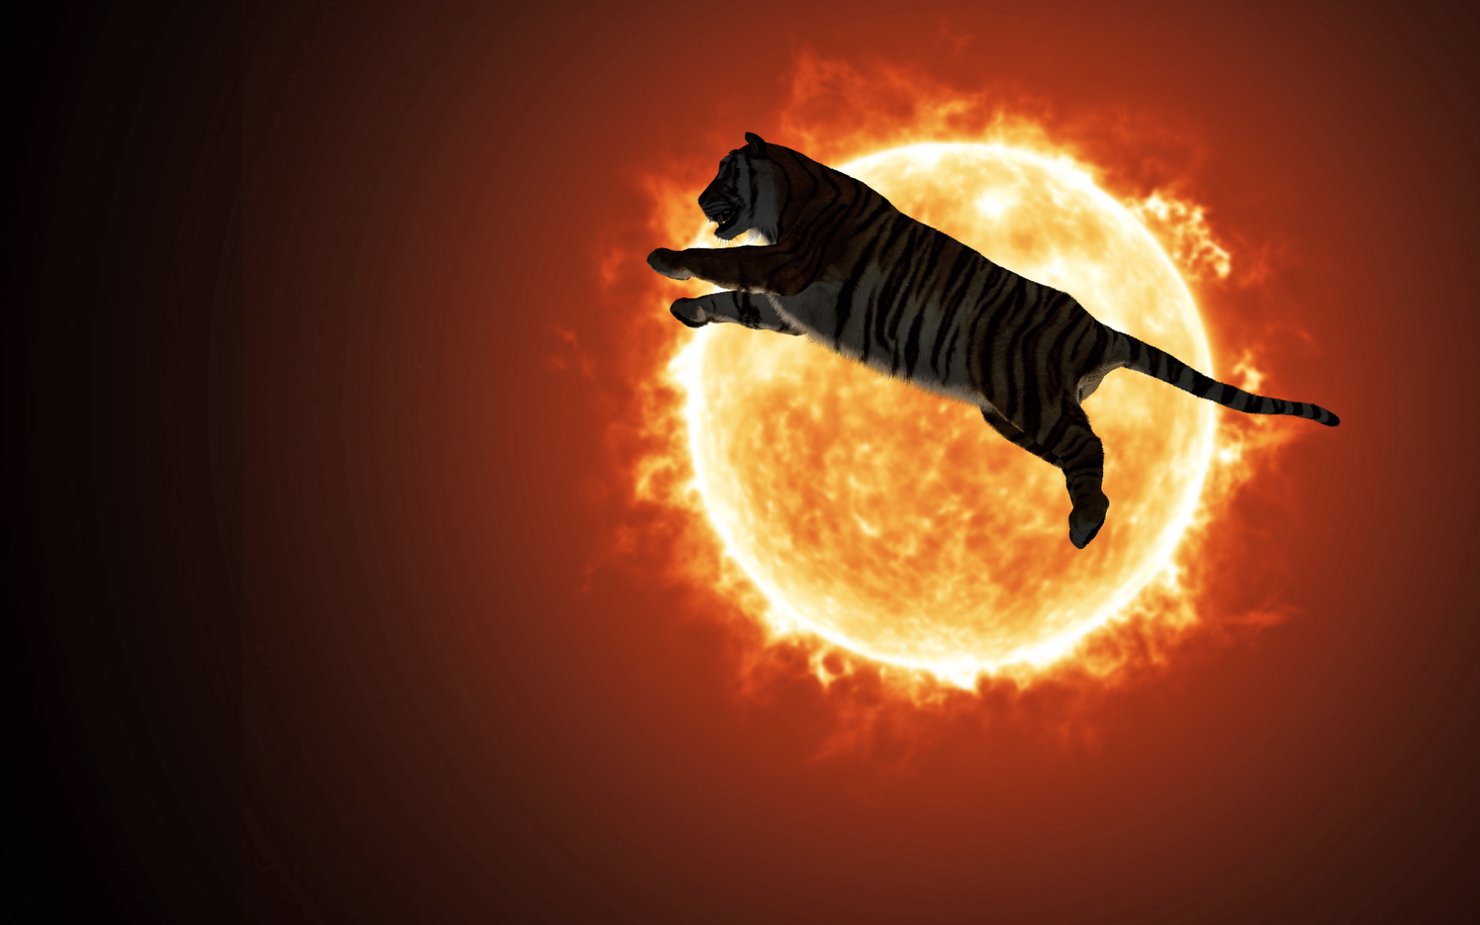 A tiger leaps across a burning sun.